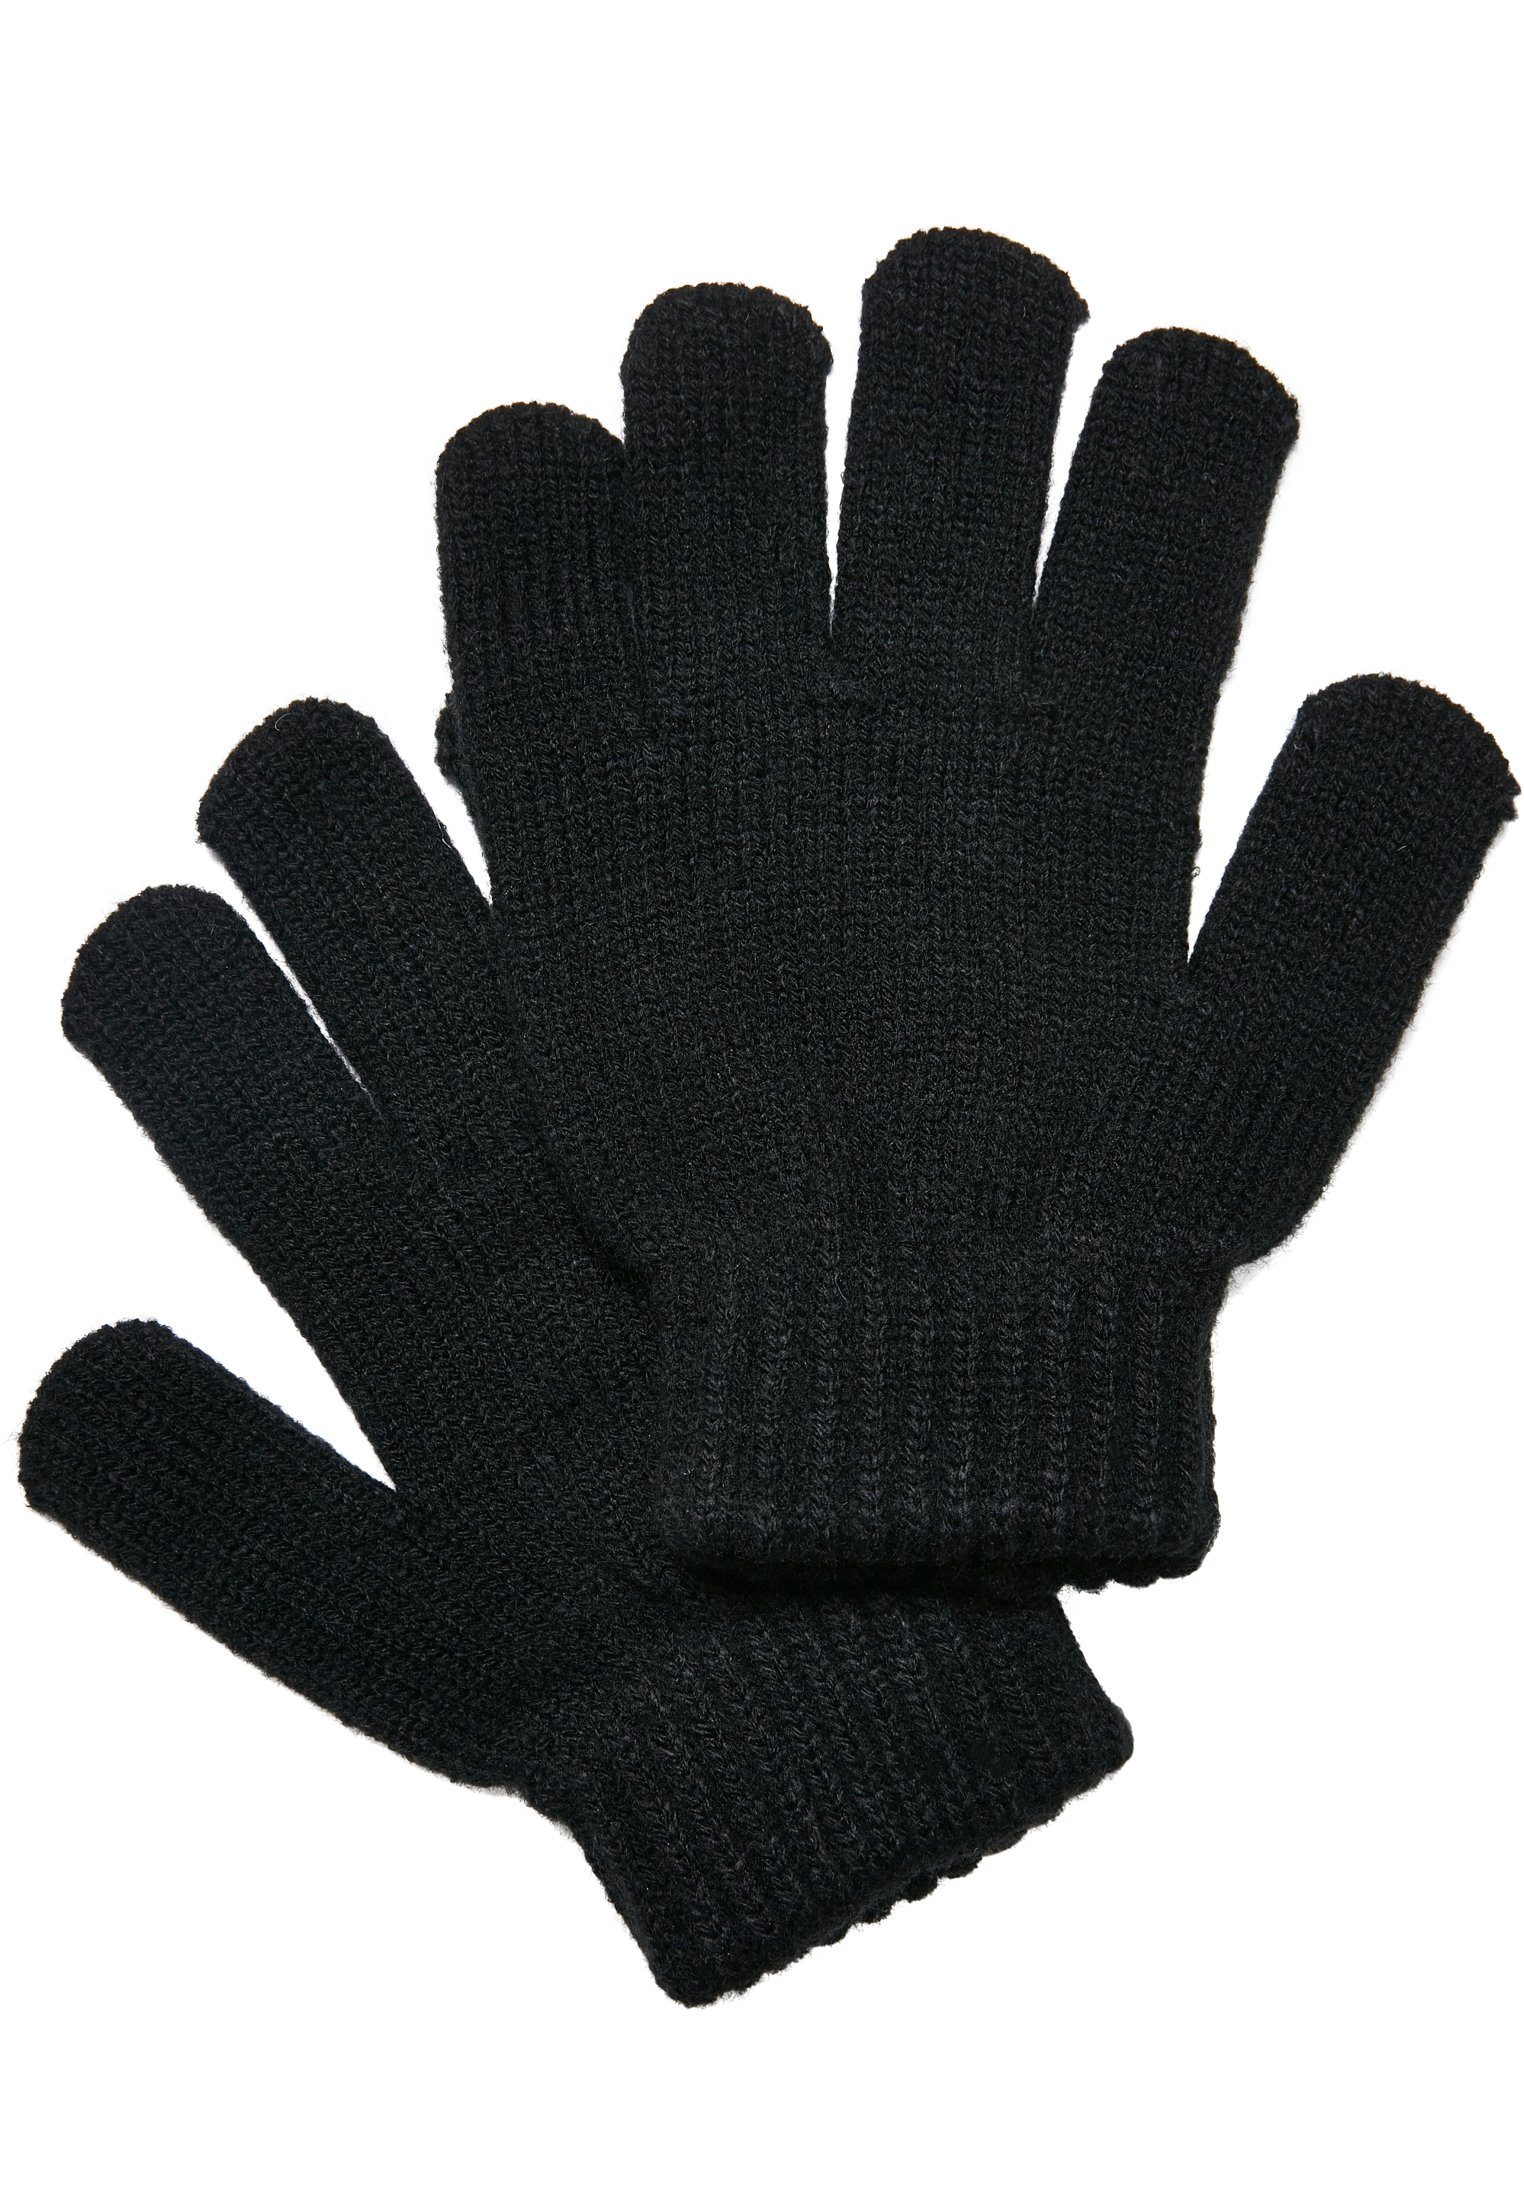 URBAN CLASSICS Gloves black Unisex Knit Baumwollhandschuhe Kids